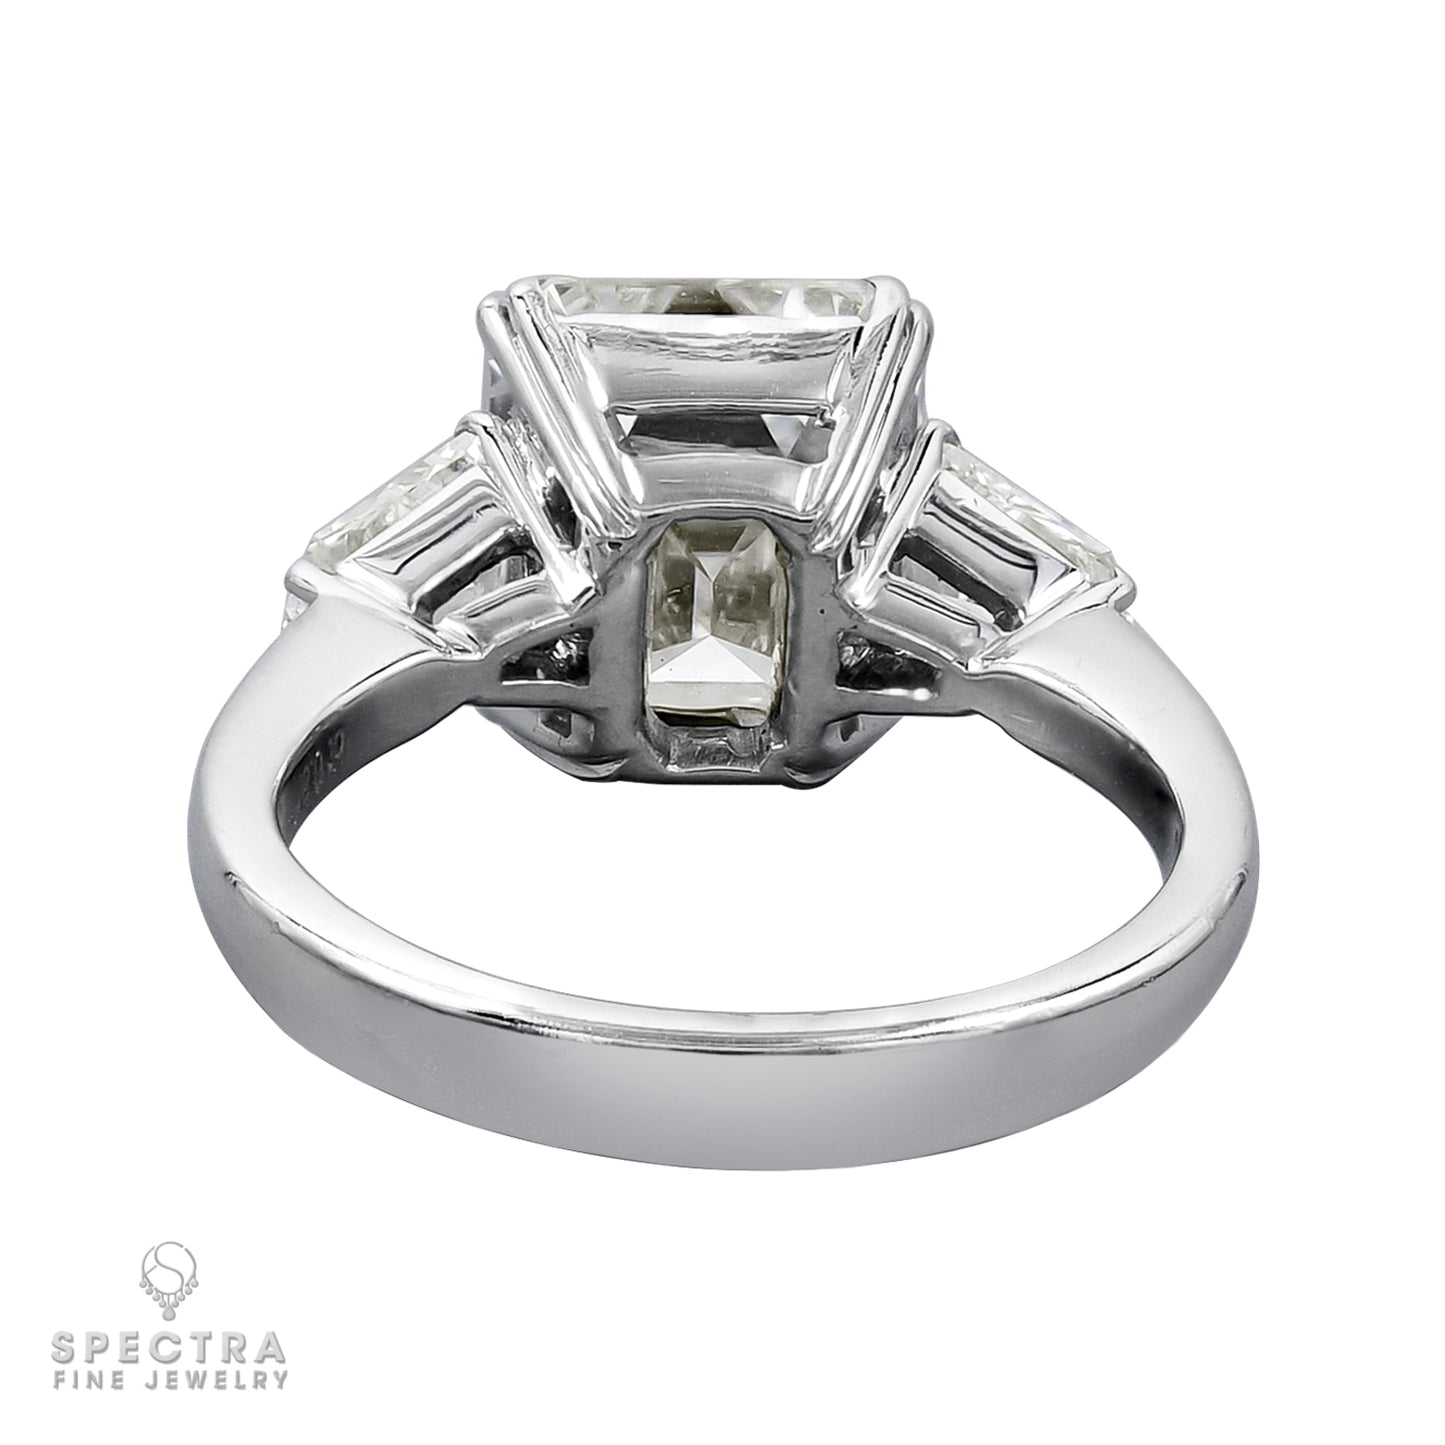 Spectra Fine Jewelry 4.16ct Diamond 18K Gold Ring